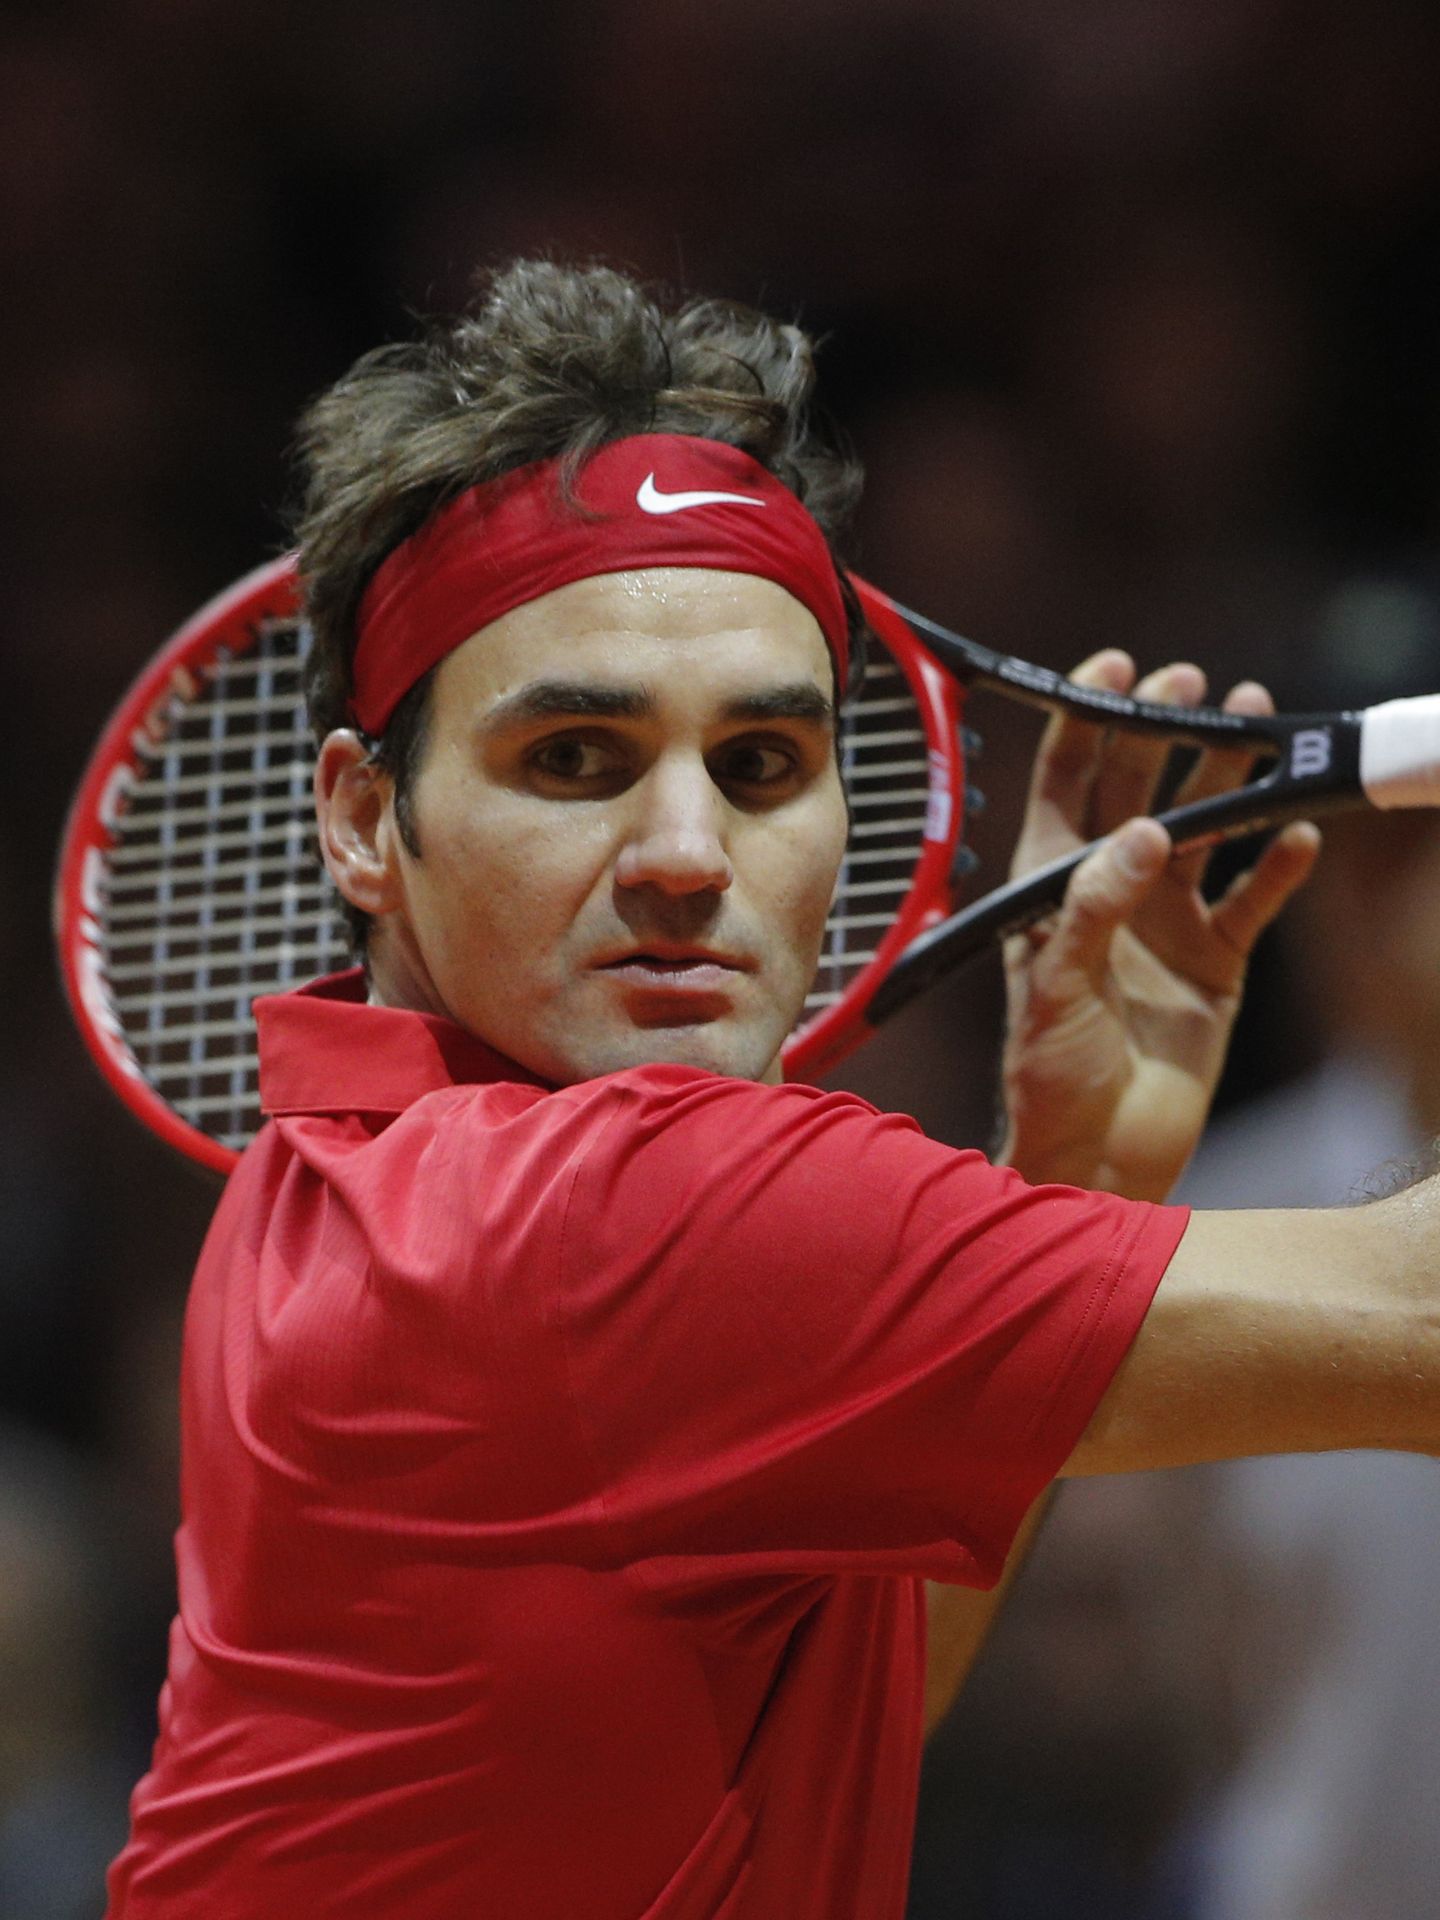 El tenista Federer en una imagen de archivo (Gtres)